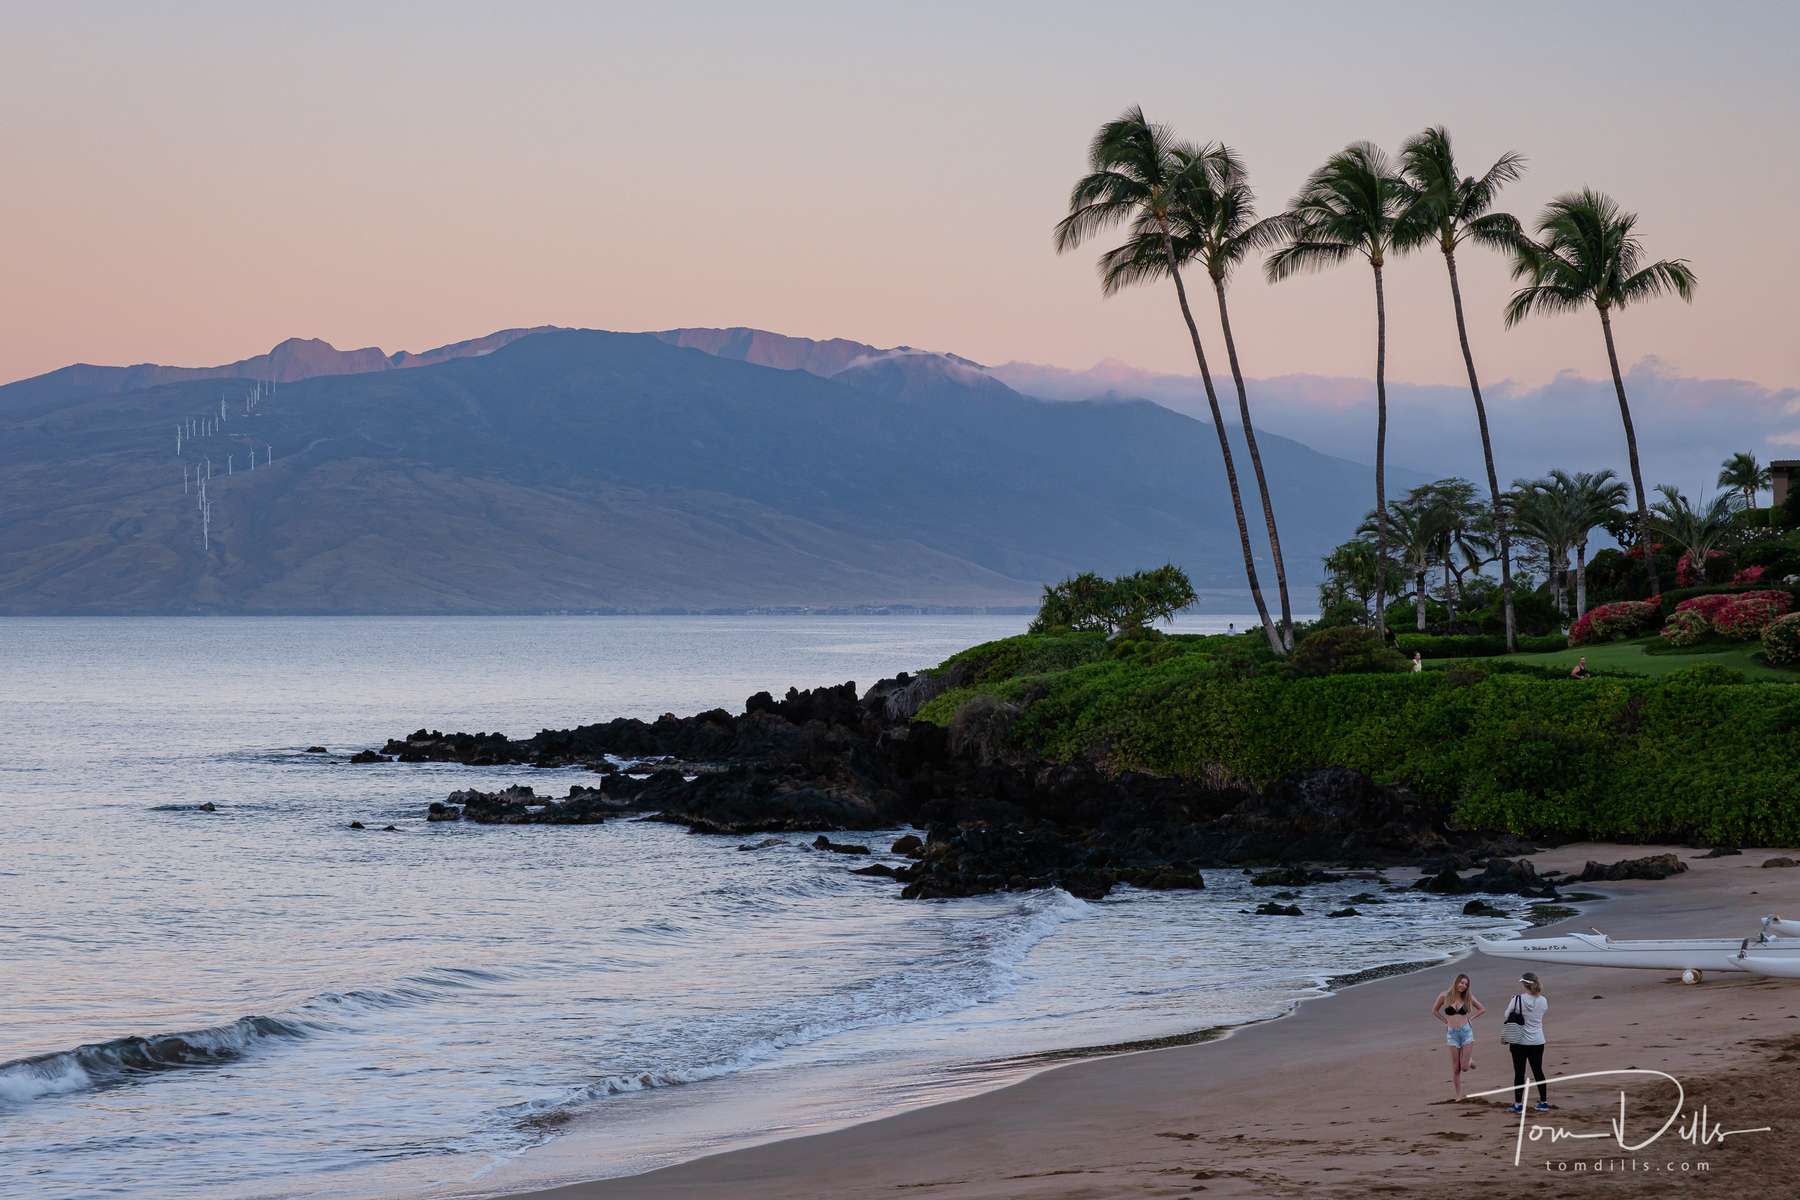 Early morning light on the beach near the Fairmont Kea Lani Hotel in Wailea, Maui